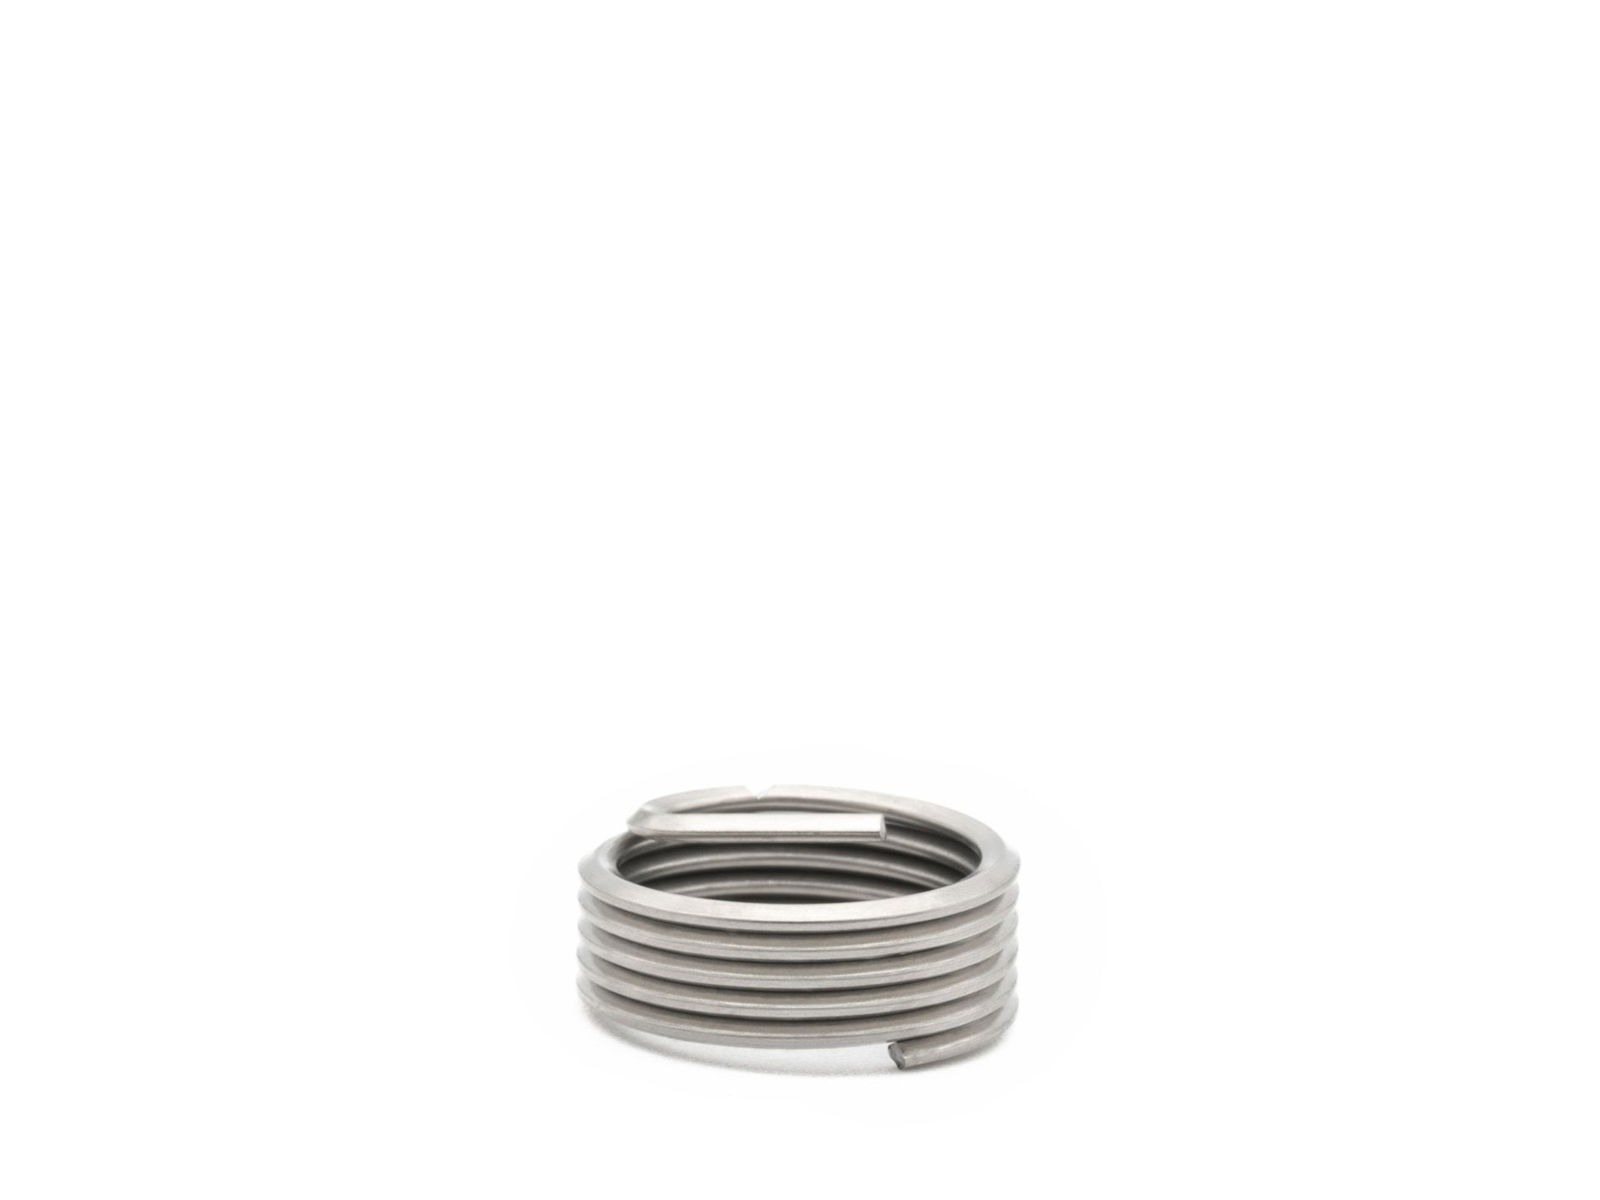 BaerCoil Wire Thread Inserts G (BSP) 1/8 x 28 - 1.5 D (4.76 mm) - free running - 100 pcs.